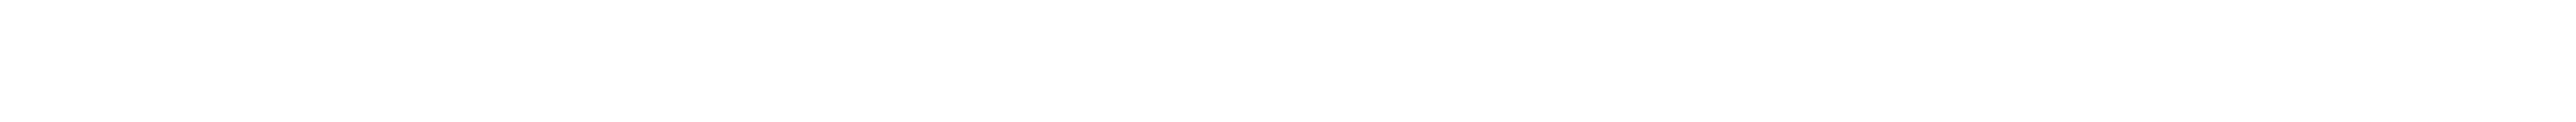 logo-type-w